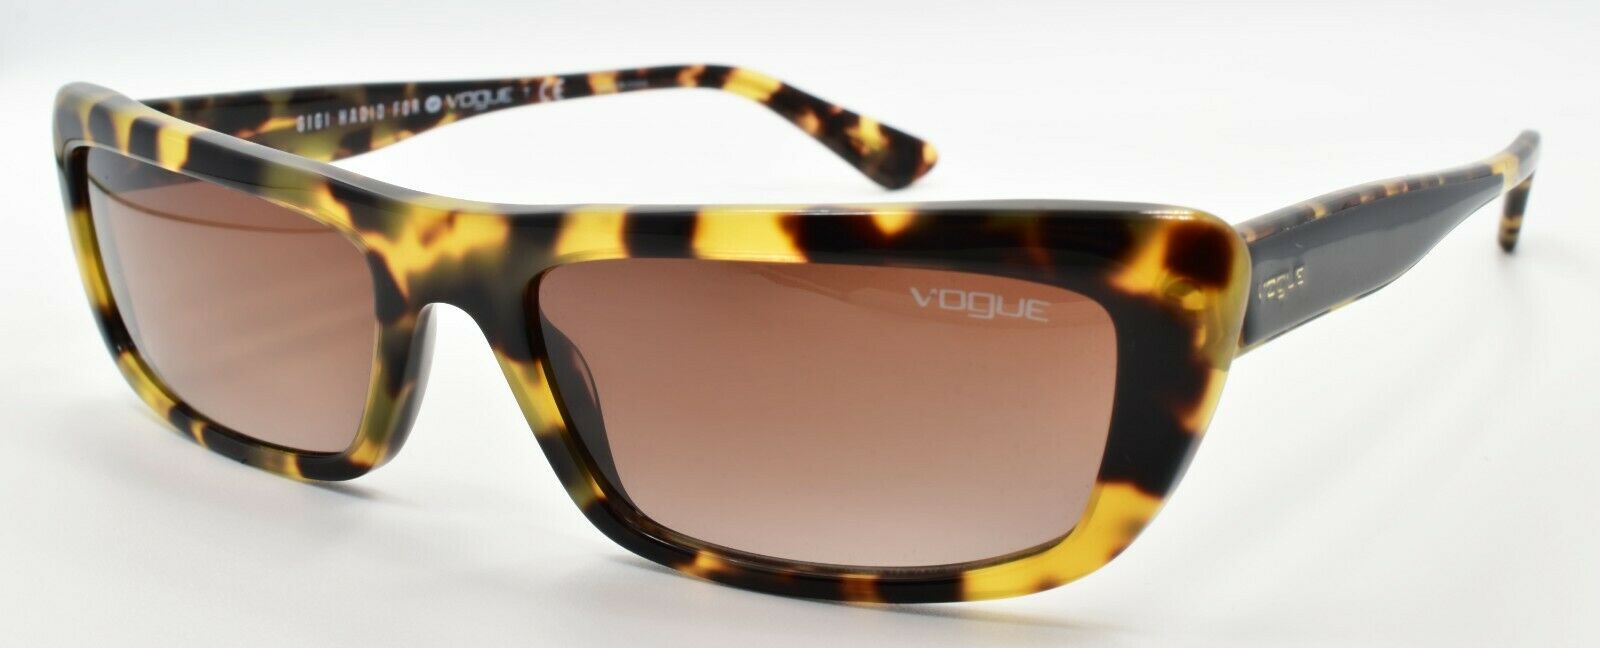 1-Vogue x Gigi Hadid VO5283S 260513 Women's Sunglasses Tortoise / Brown Gradient-8056597048781-IKSpecs